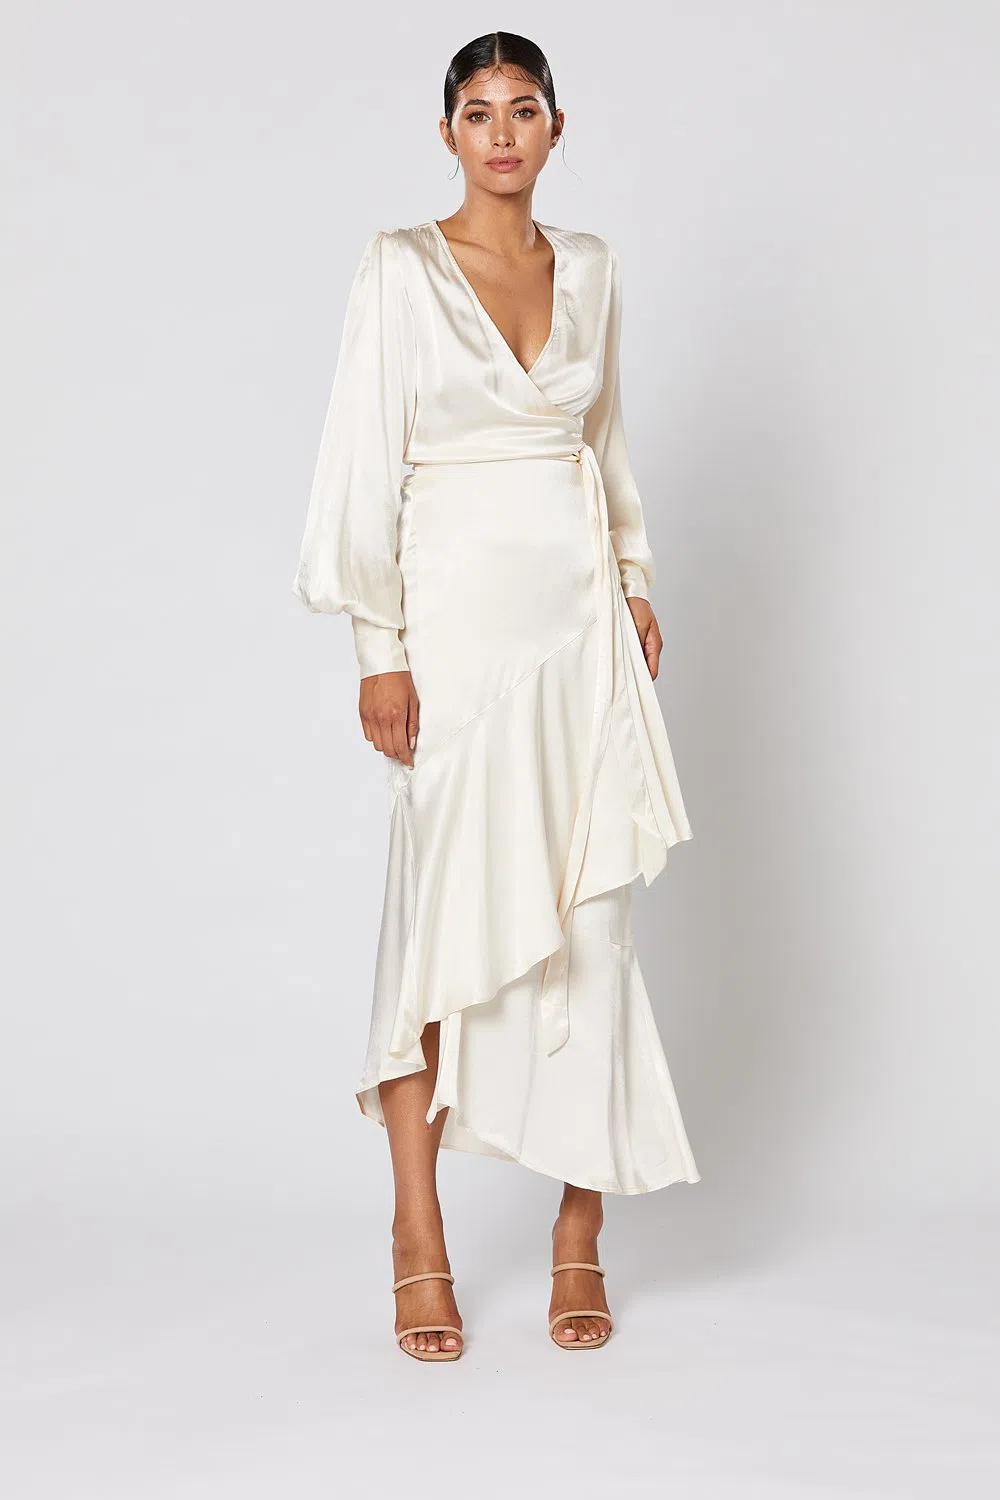 Winona Miele Dress White Size 14